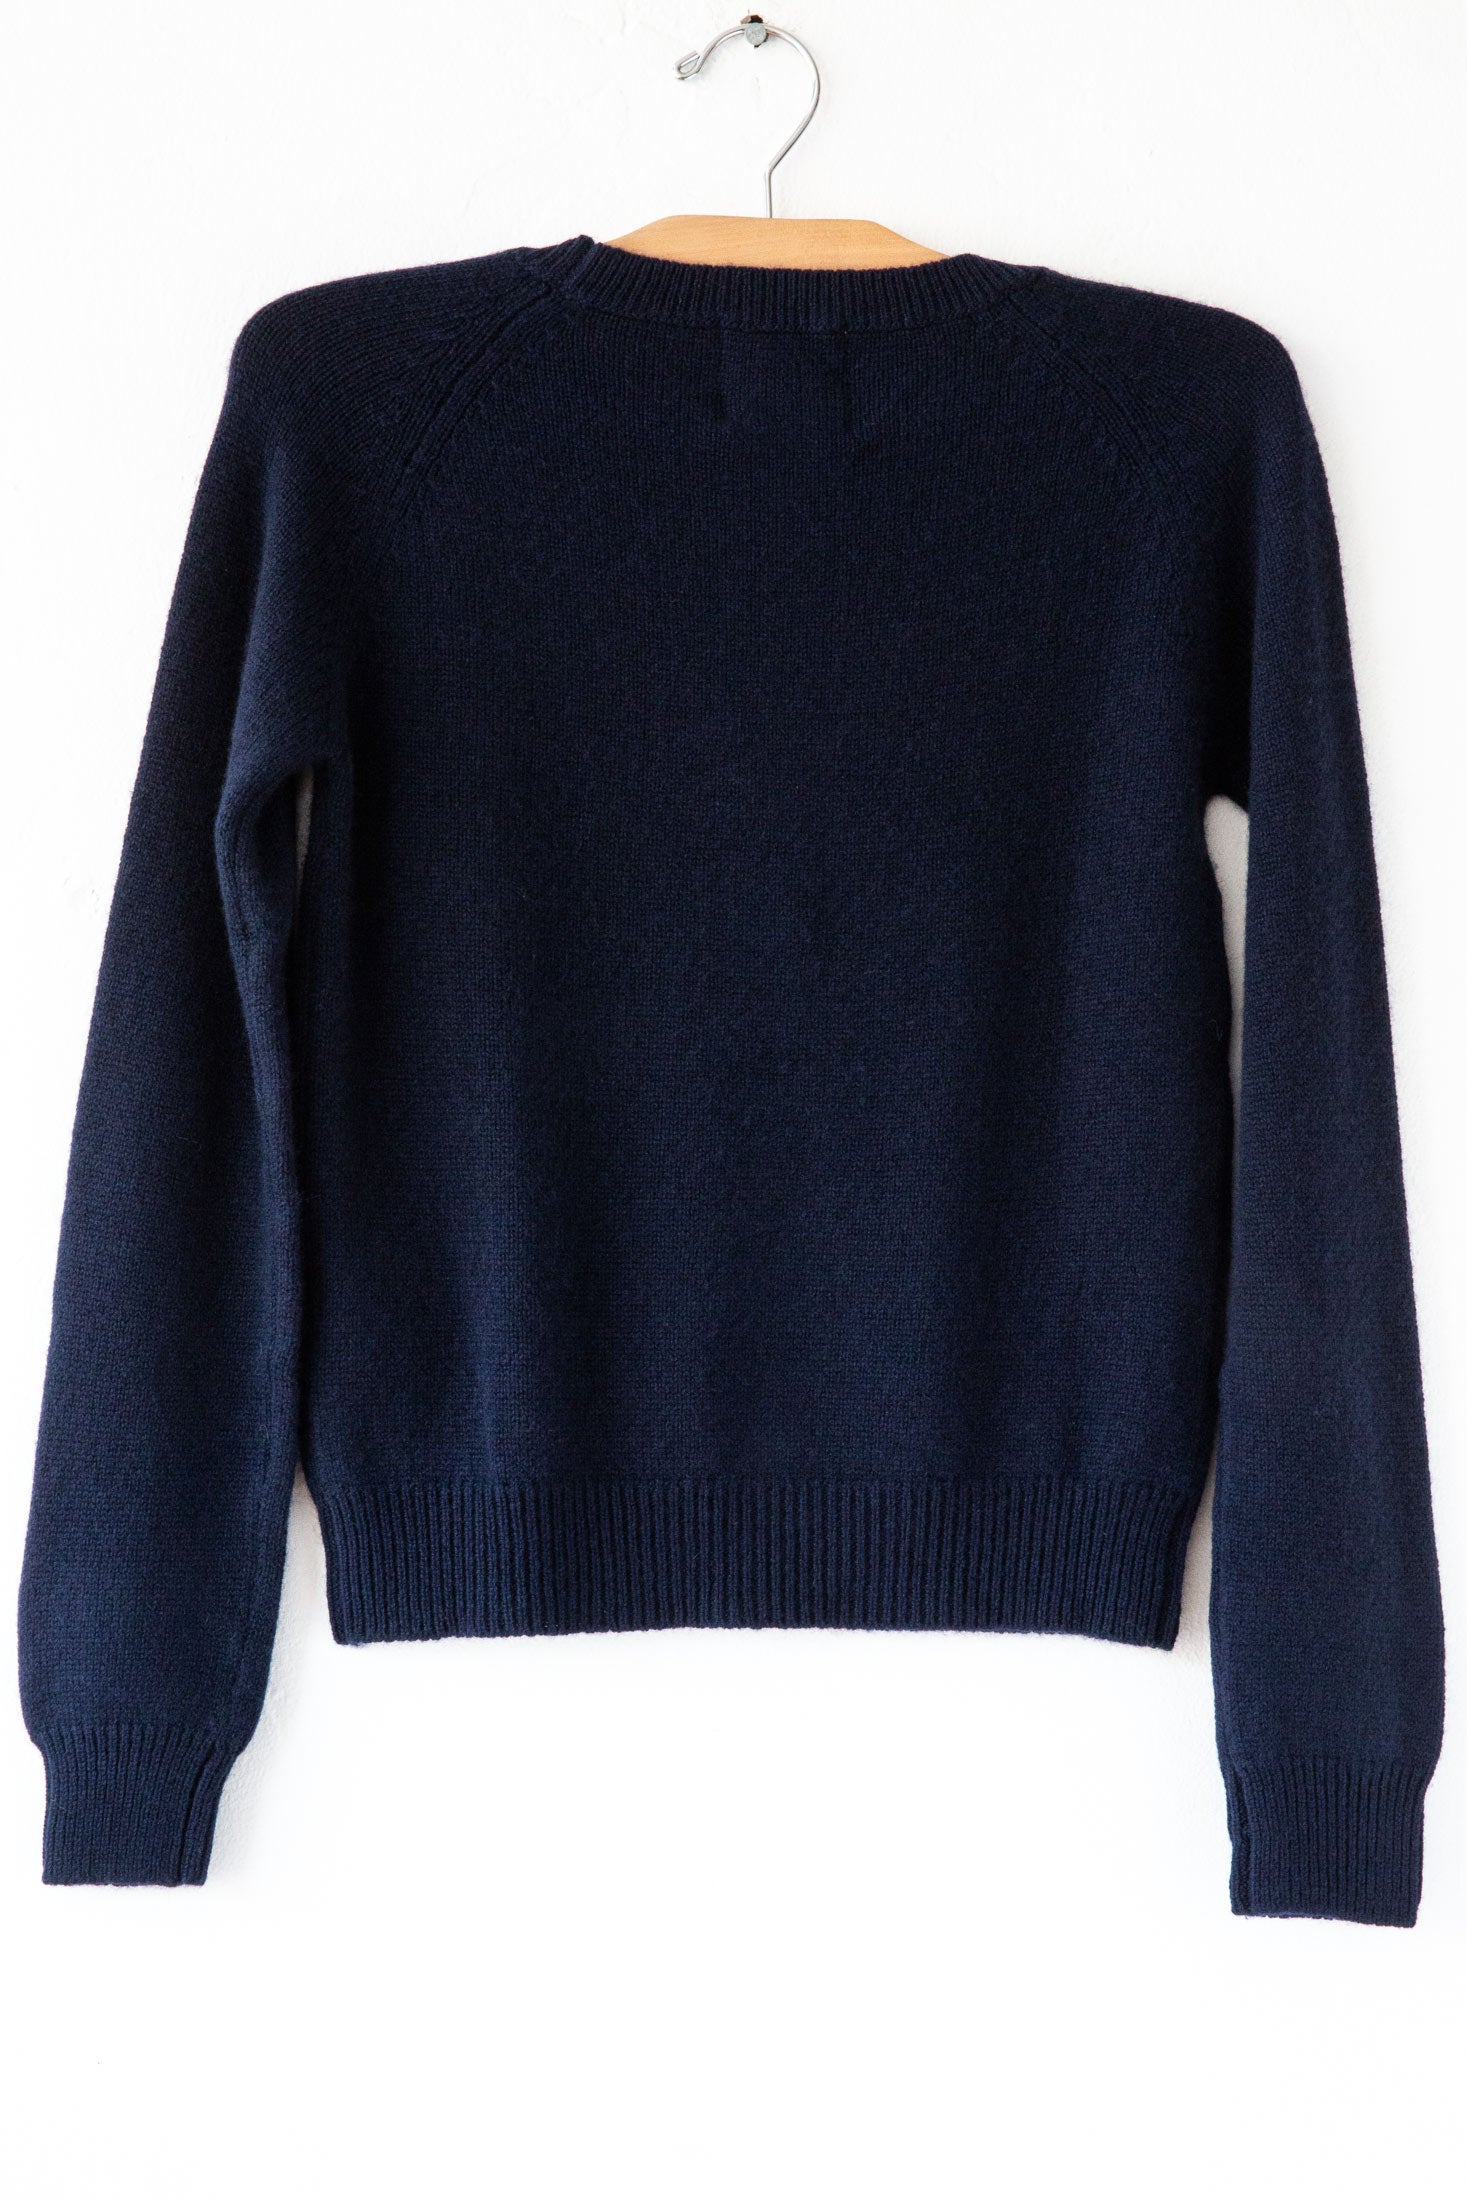 Crop Navy Crewneck Sweater